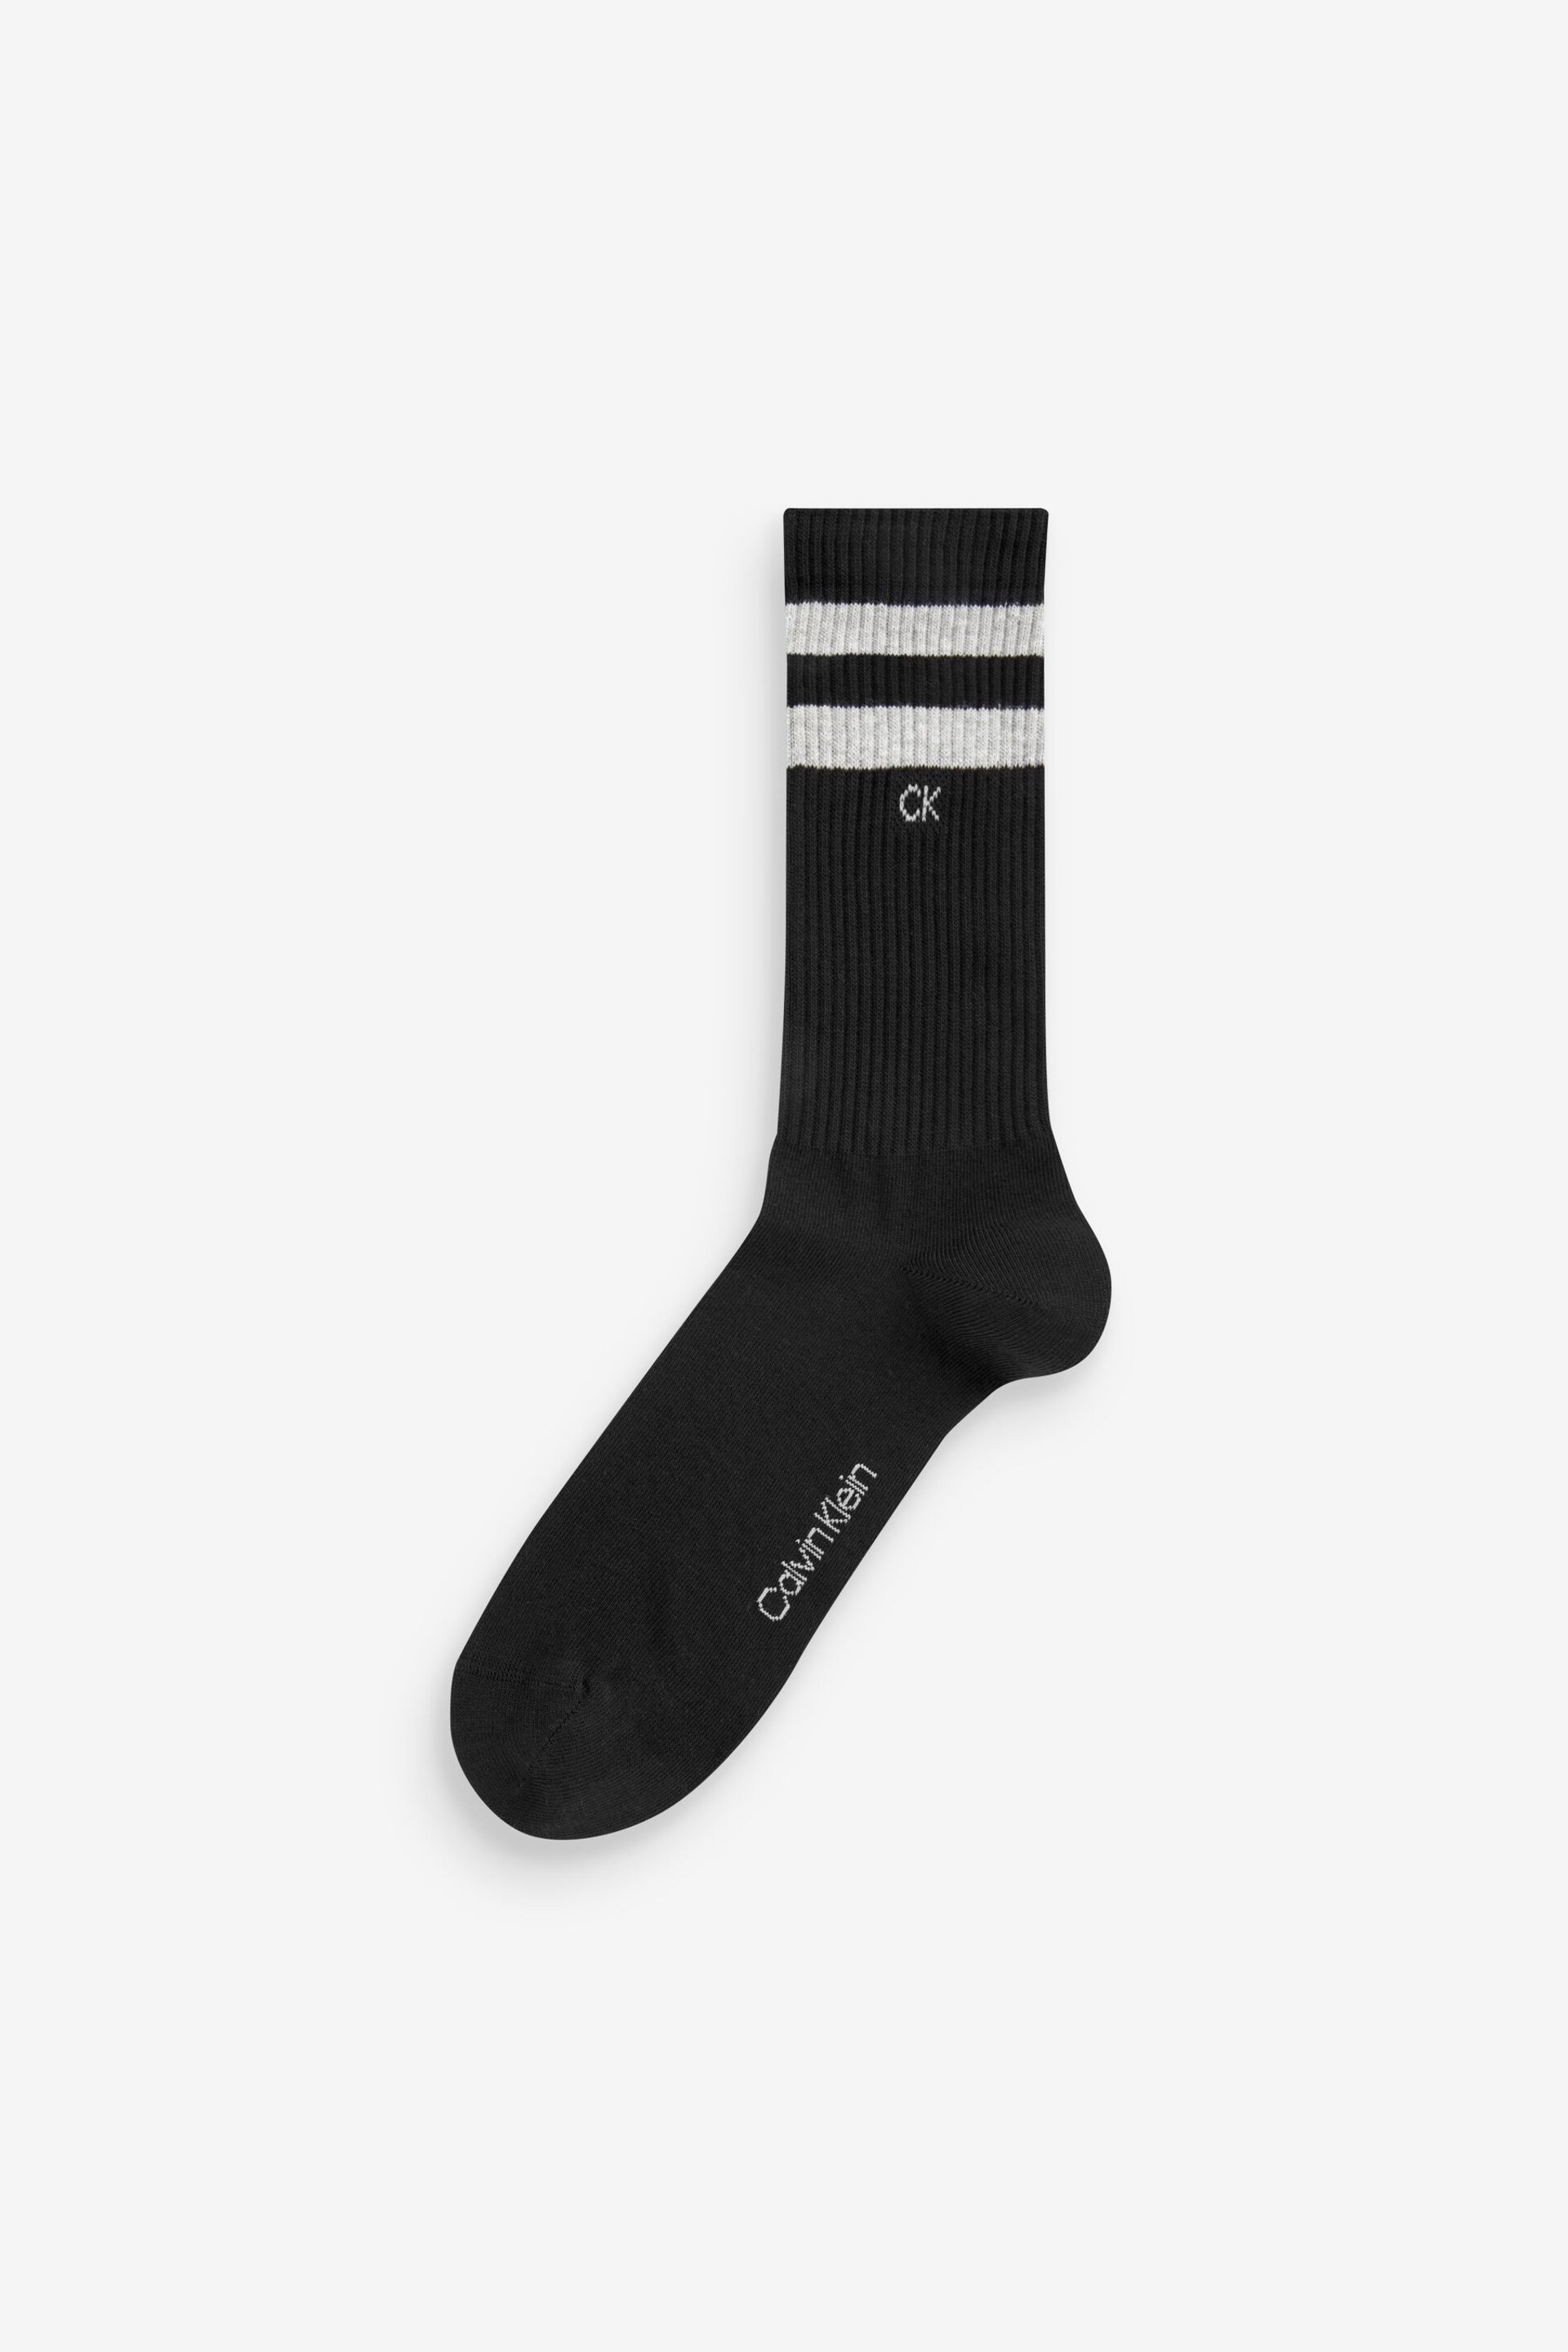 Calvin Klein Black Mens Stripe Socks 2 Pack - Image 2 of 3